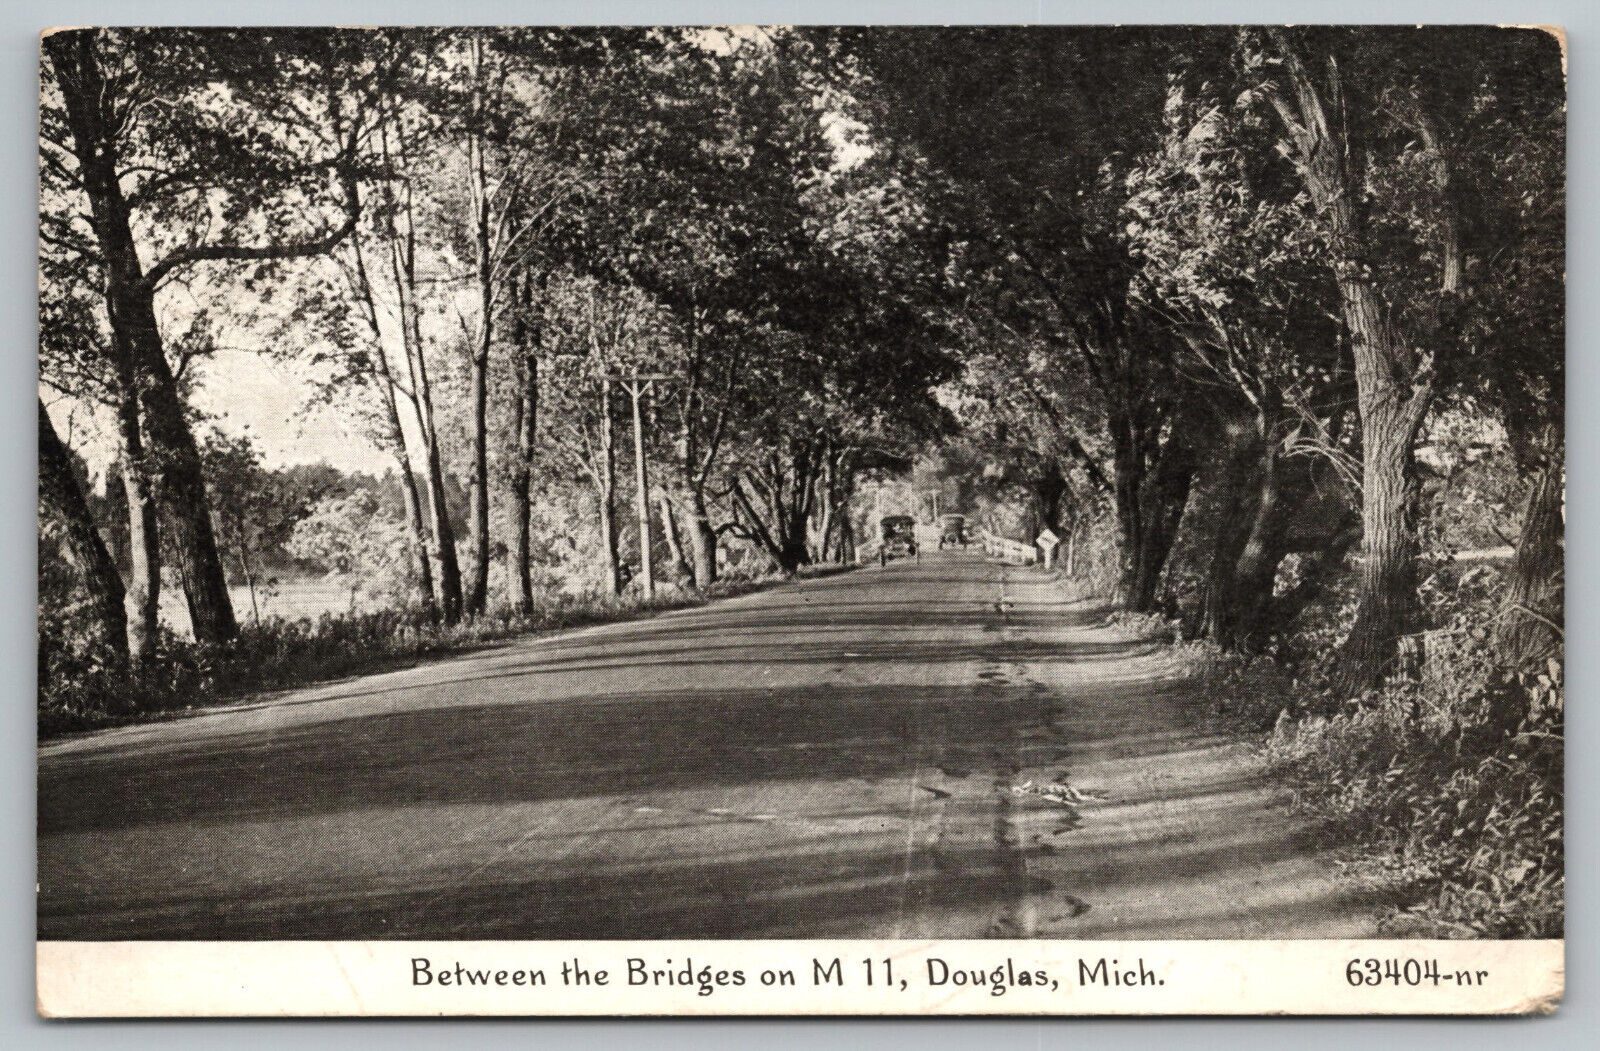 Douglas Mi Michigan - Between the Bridges on M11 - Postcard - circa 1927